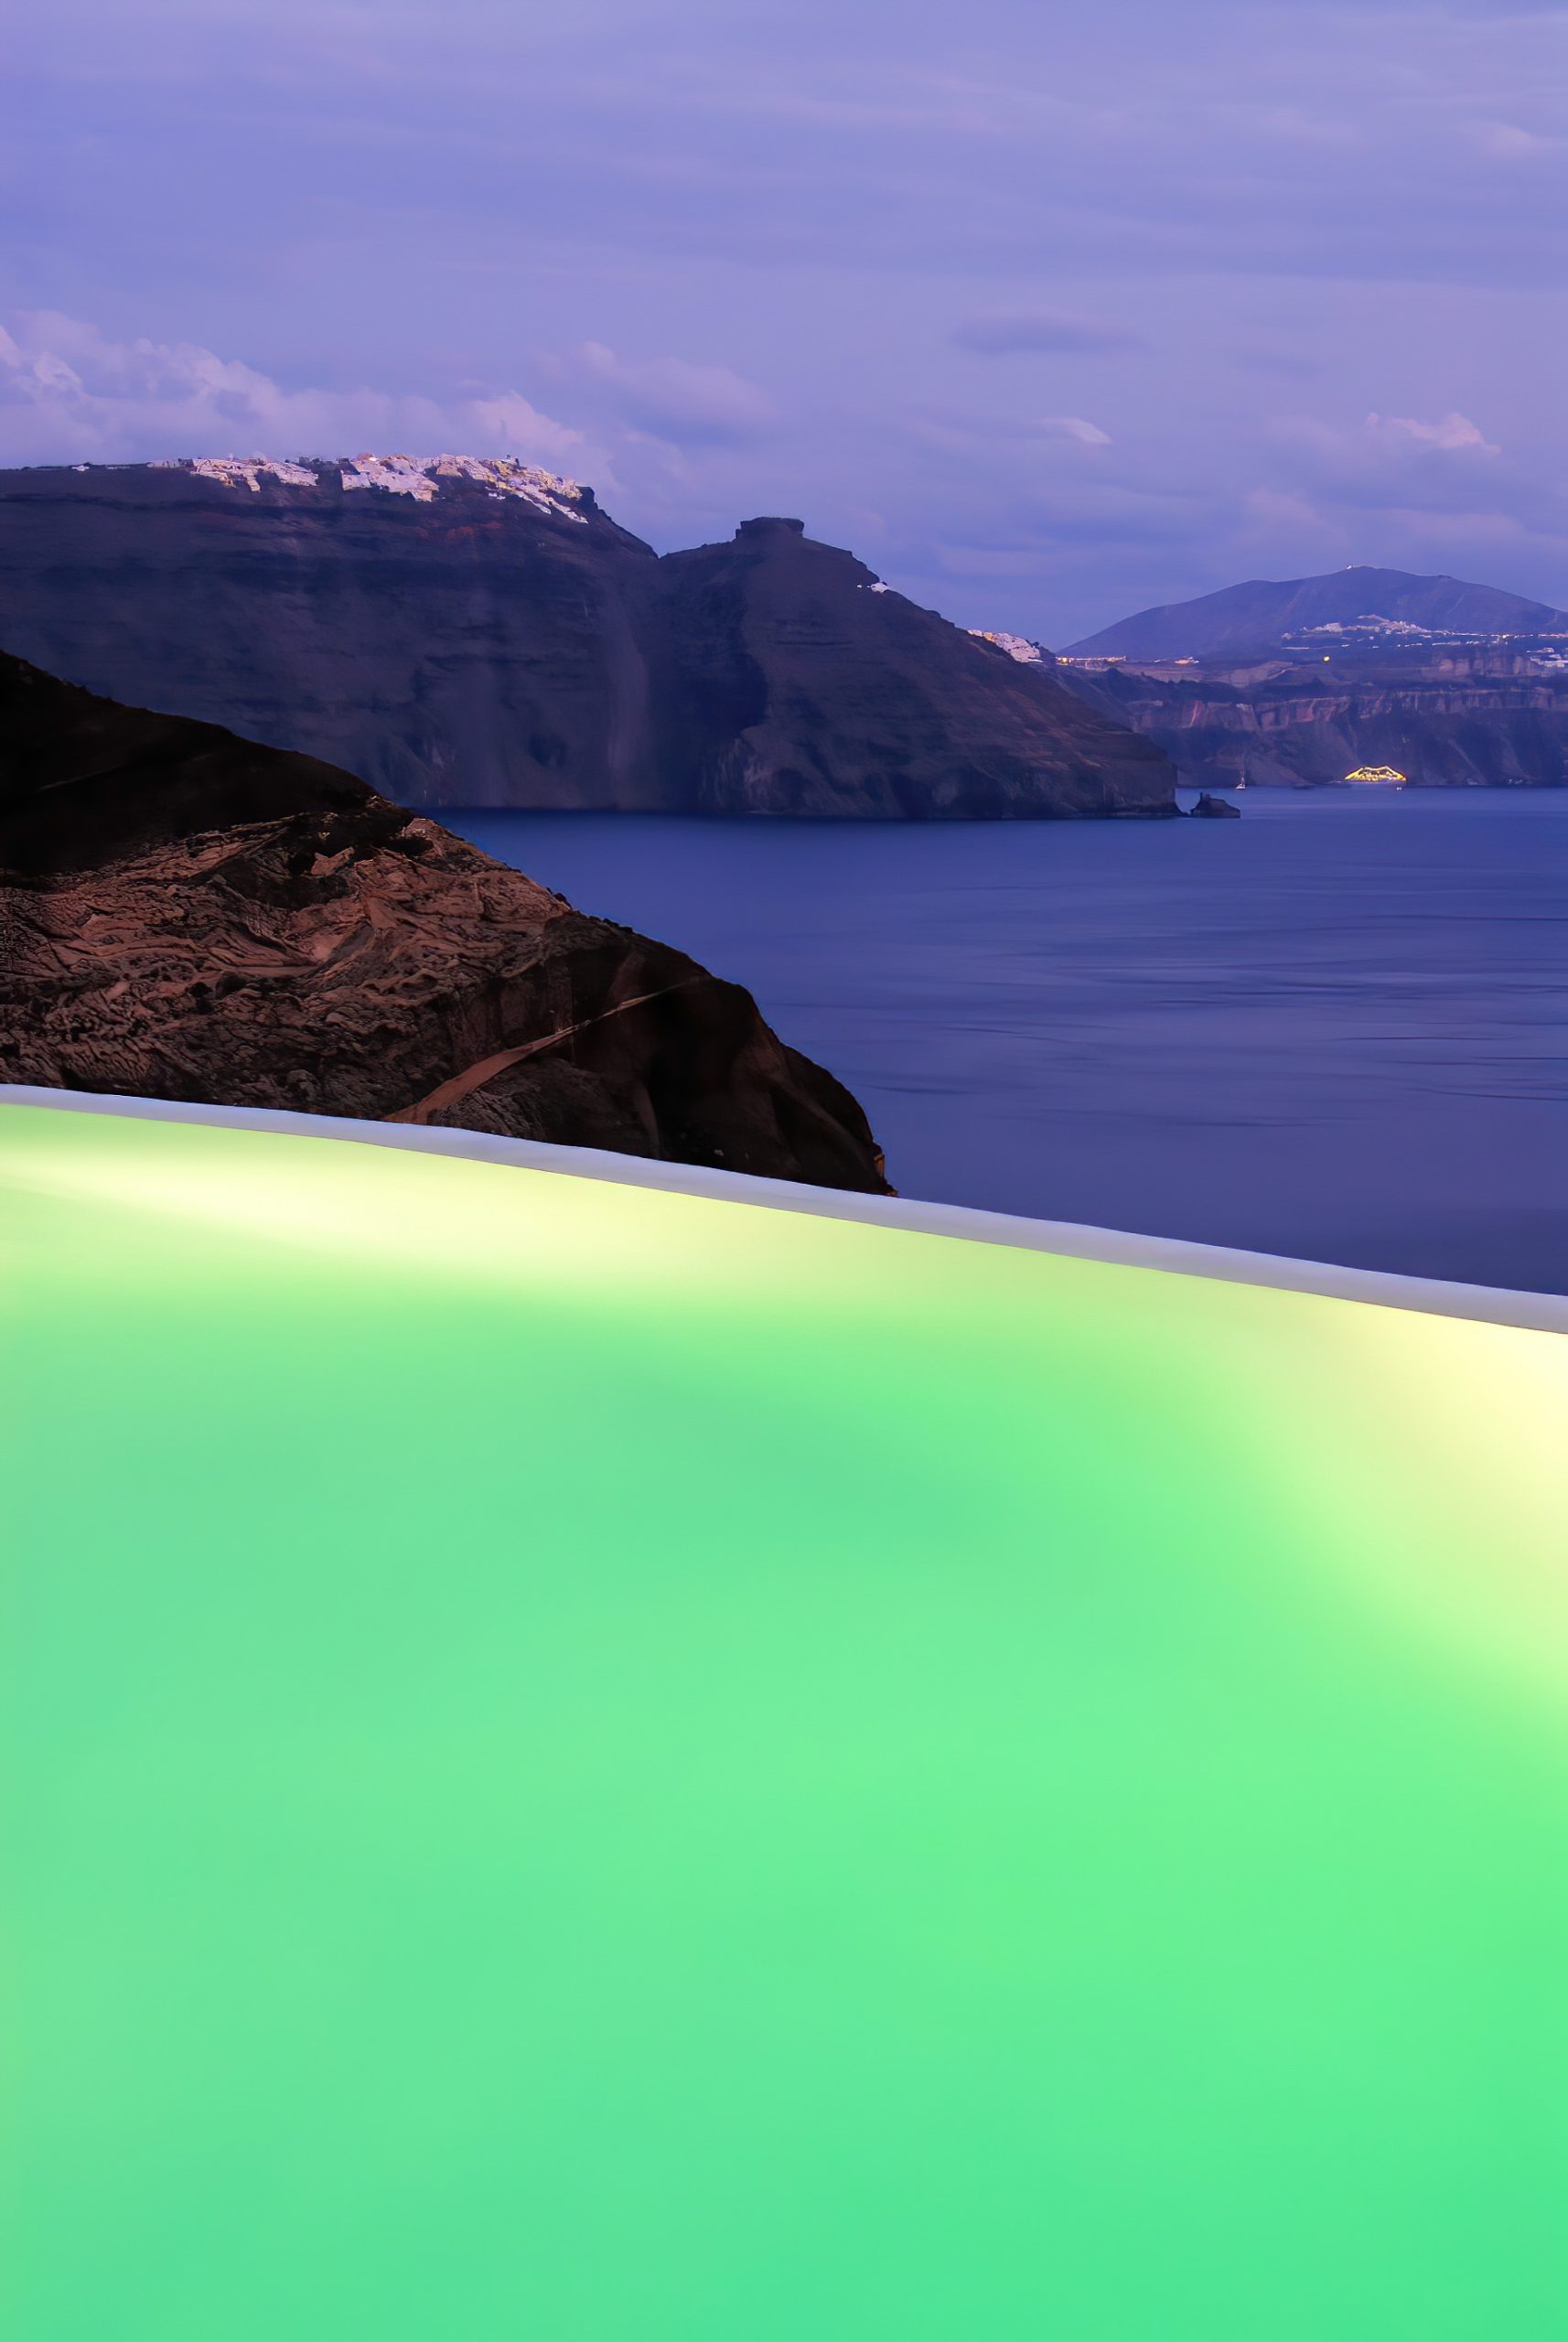 Mystique Hotel Santorini – Oia, Santorini Island, Greece – Clifftop Ocean View Infinity Pool Sunset